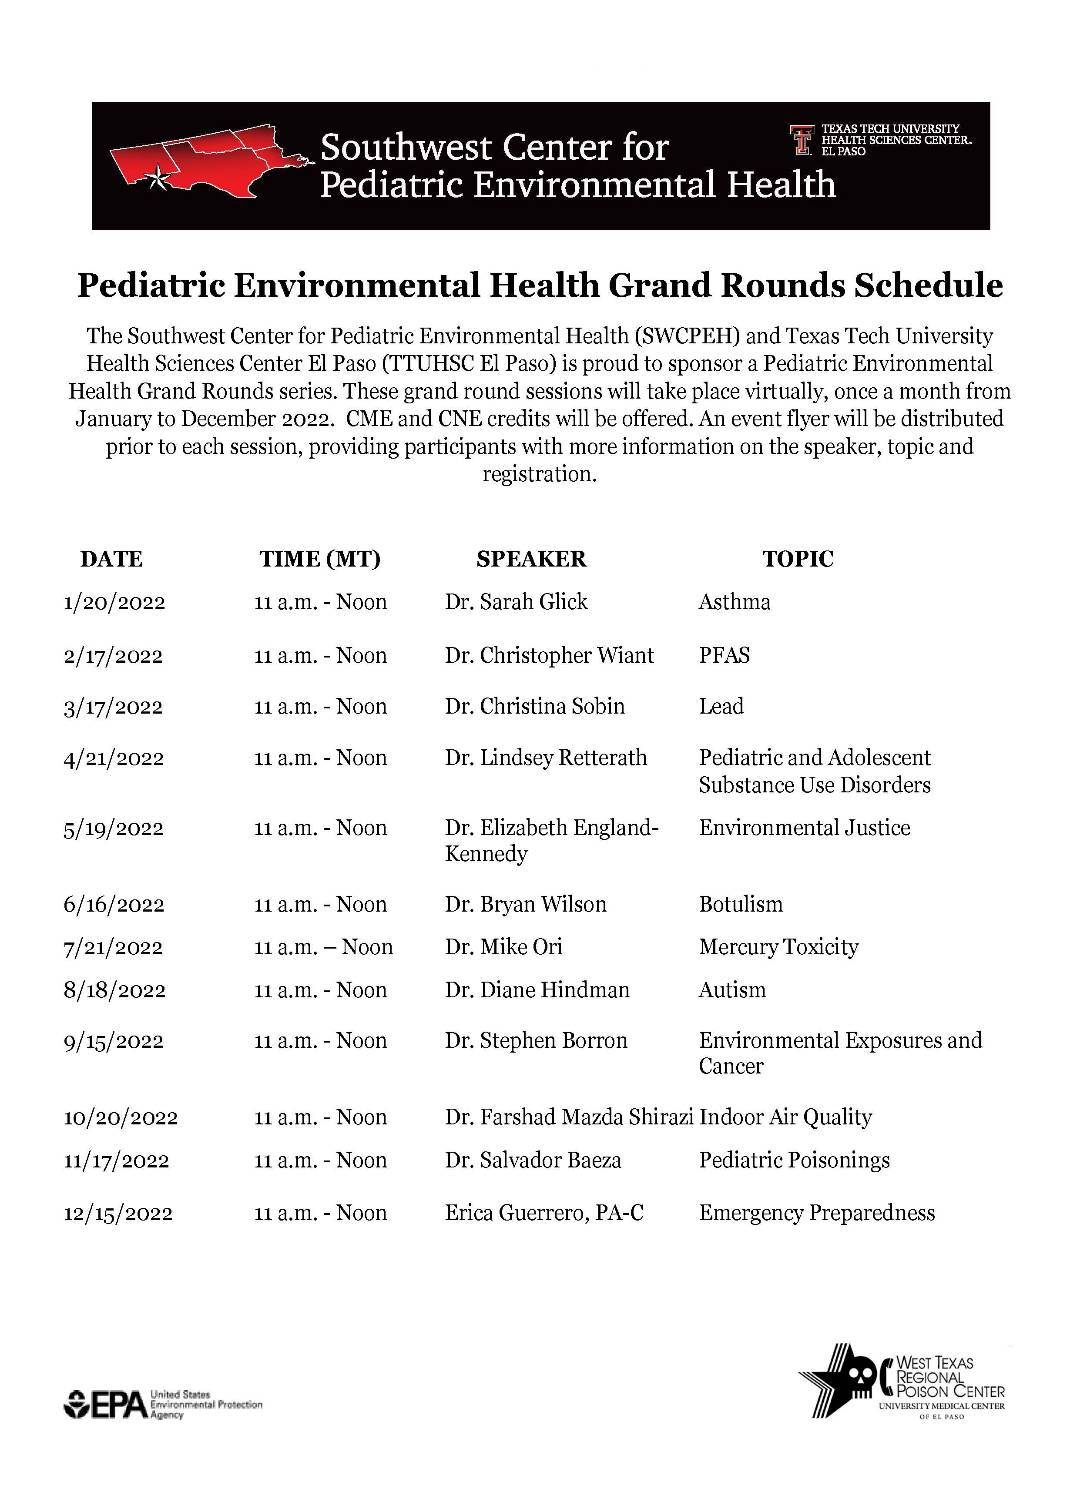 Pediatric Environmental Health Grand Rounds Schedule 2022. Contact Barron, Moraima <mobarron@ttuhsc.edu> for more information.